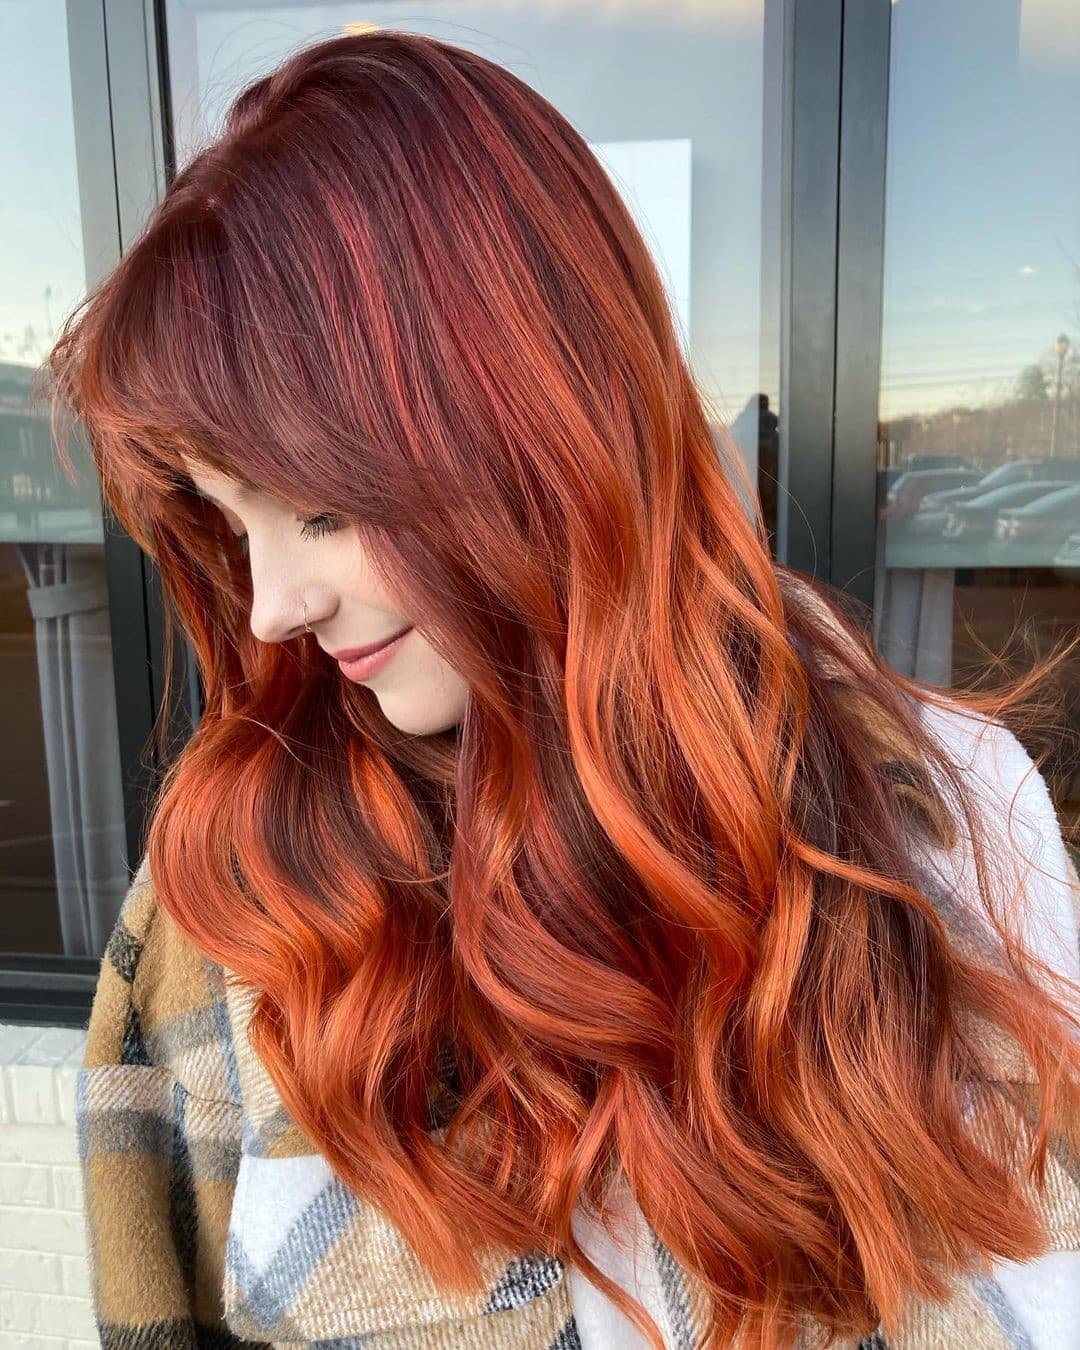 Pumpkin Spice Hair Color